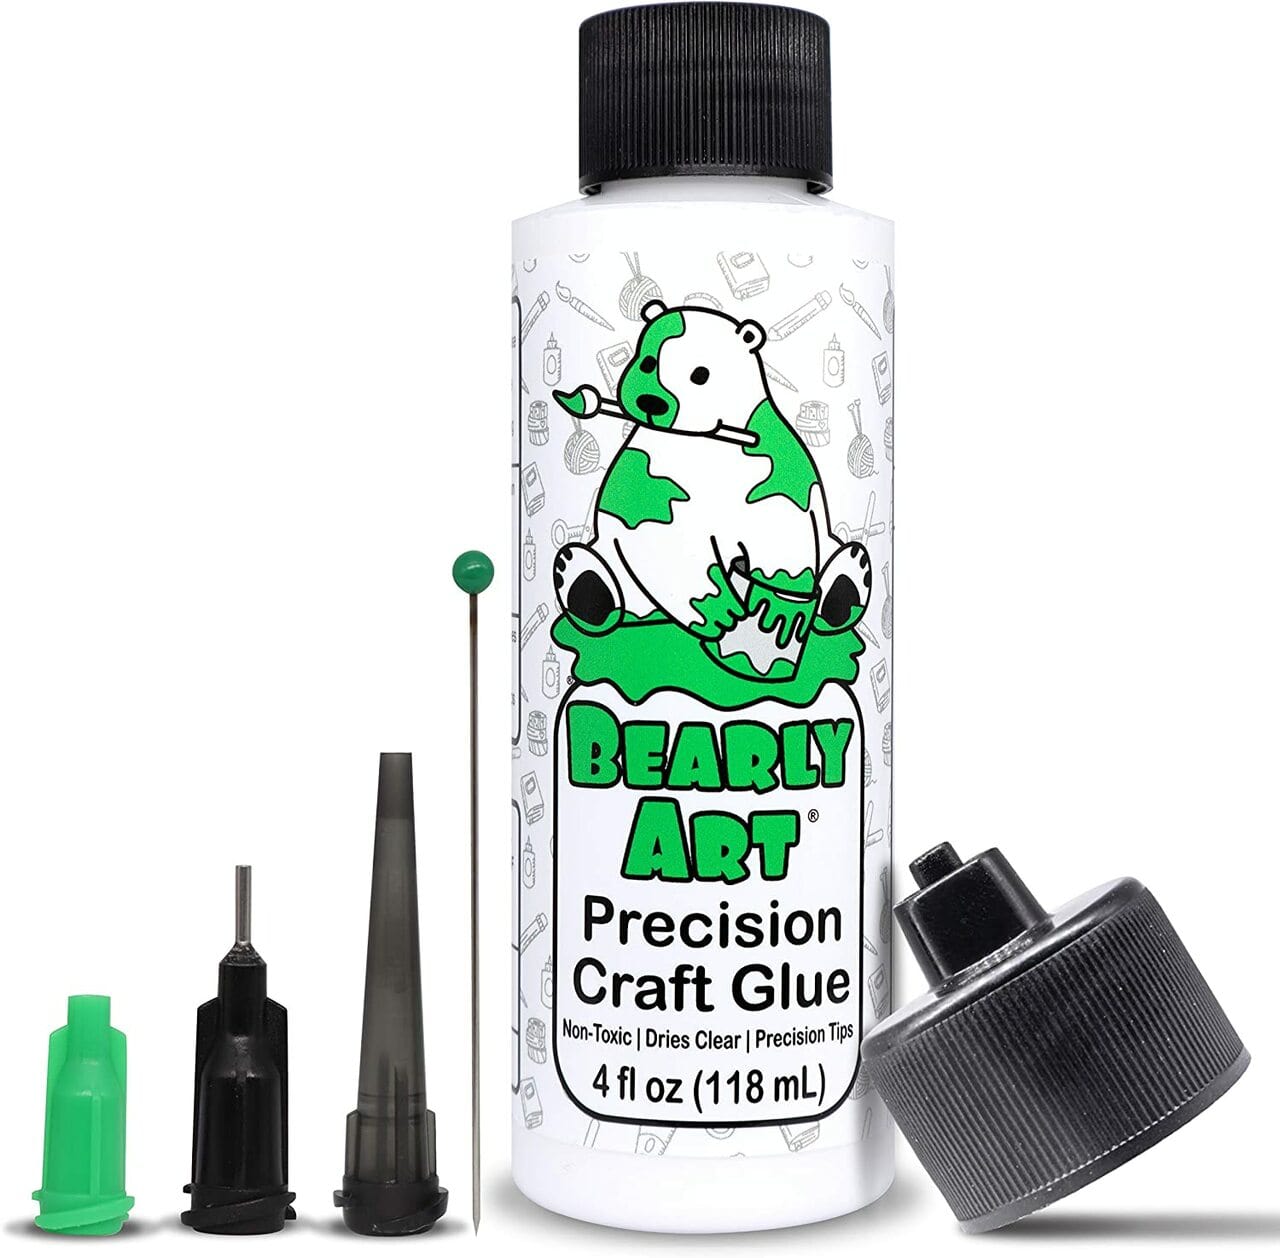 Art Institute Precision Craft Glue - Art Glitter Glue for Crafts - 8fl oz -  Precision Glue Tip - Metal Tip - 3 Refillable Bottles - Flexible and Crack